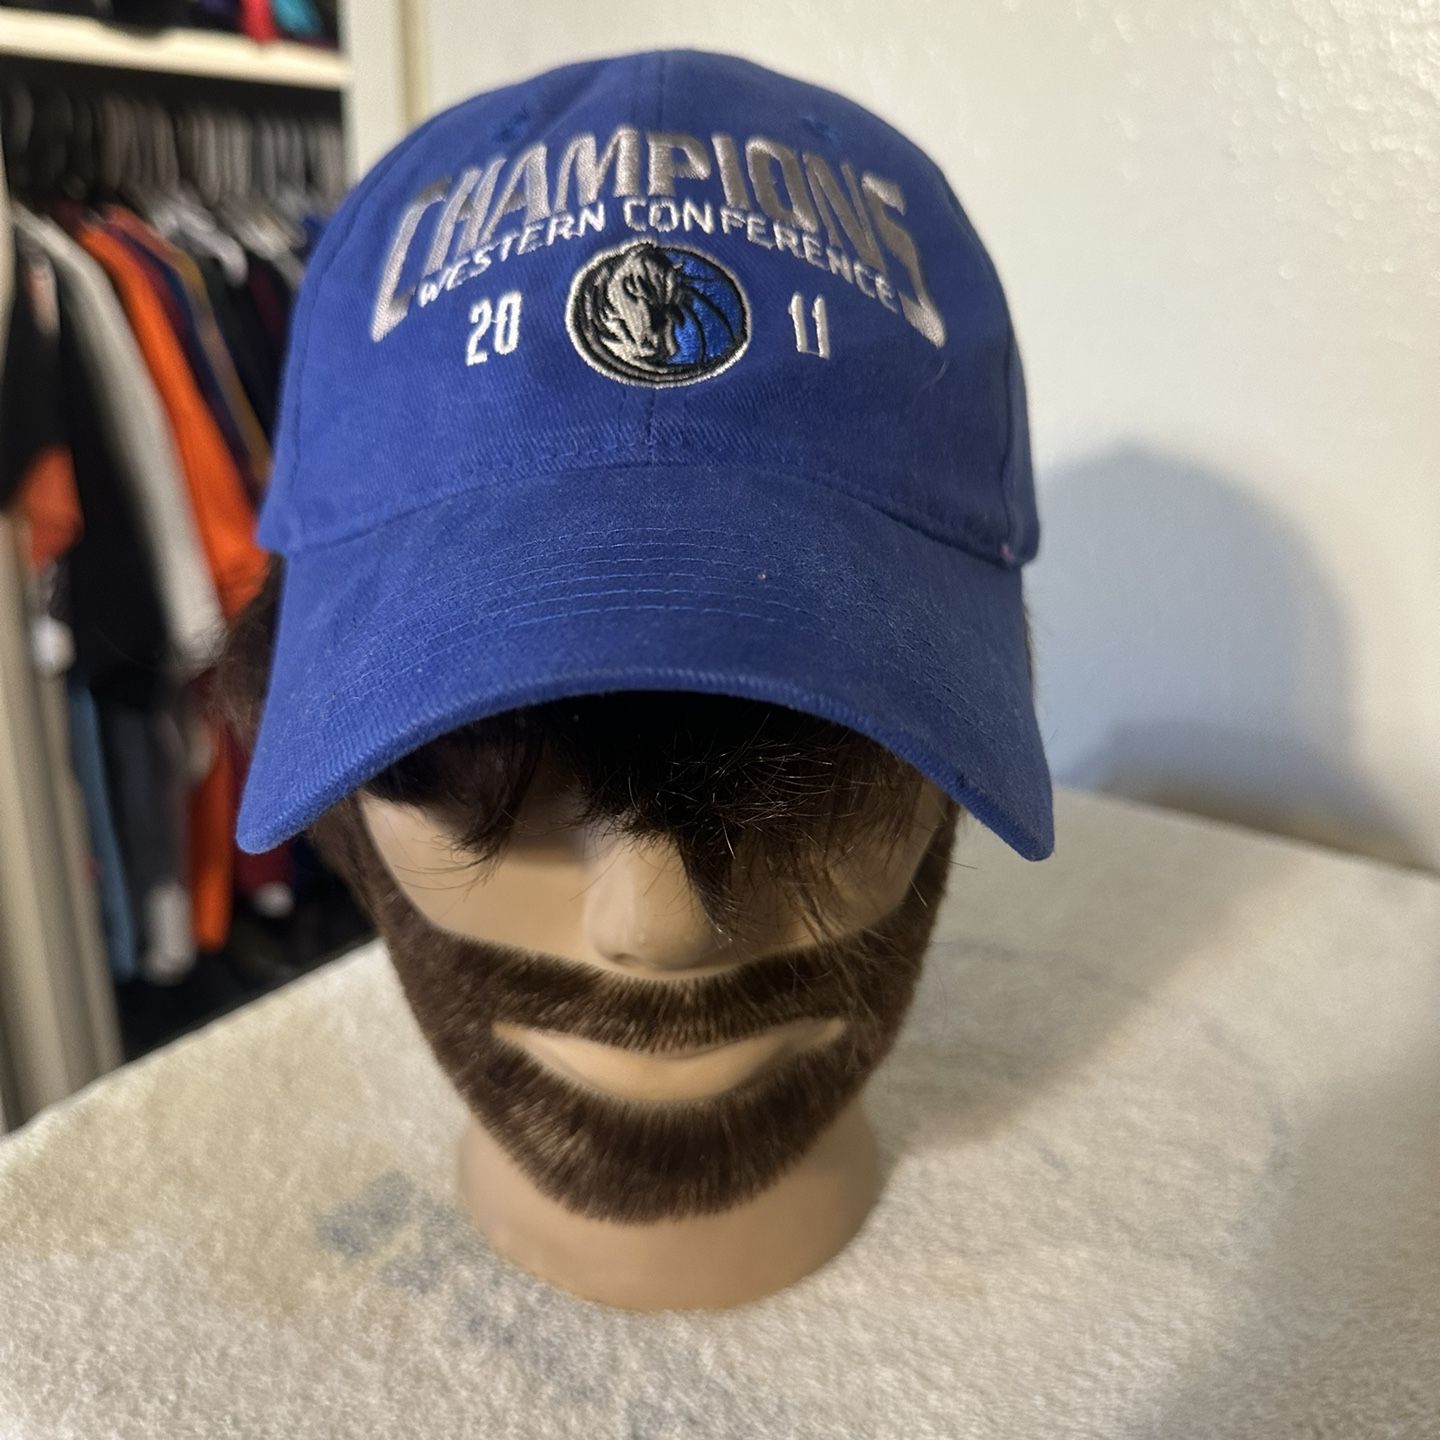 Vintage Dallas Mavericks “championship” hat 2011 for Sale in Richardson, TX  - OfferUp